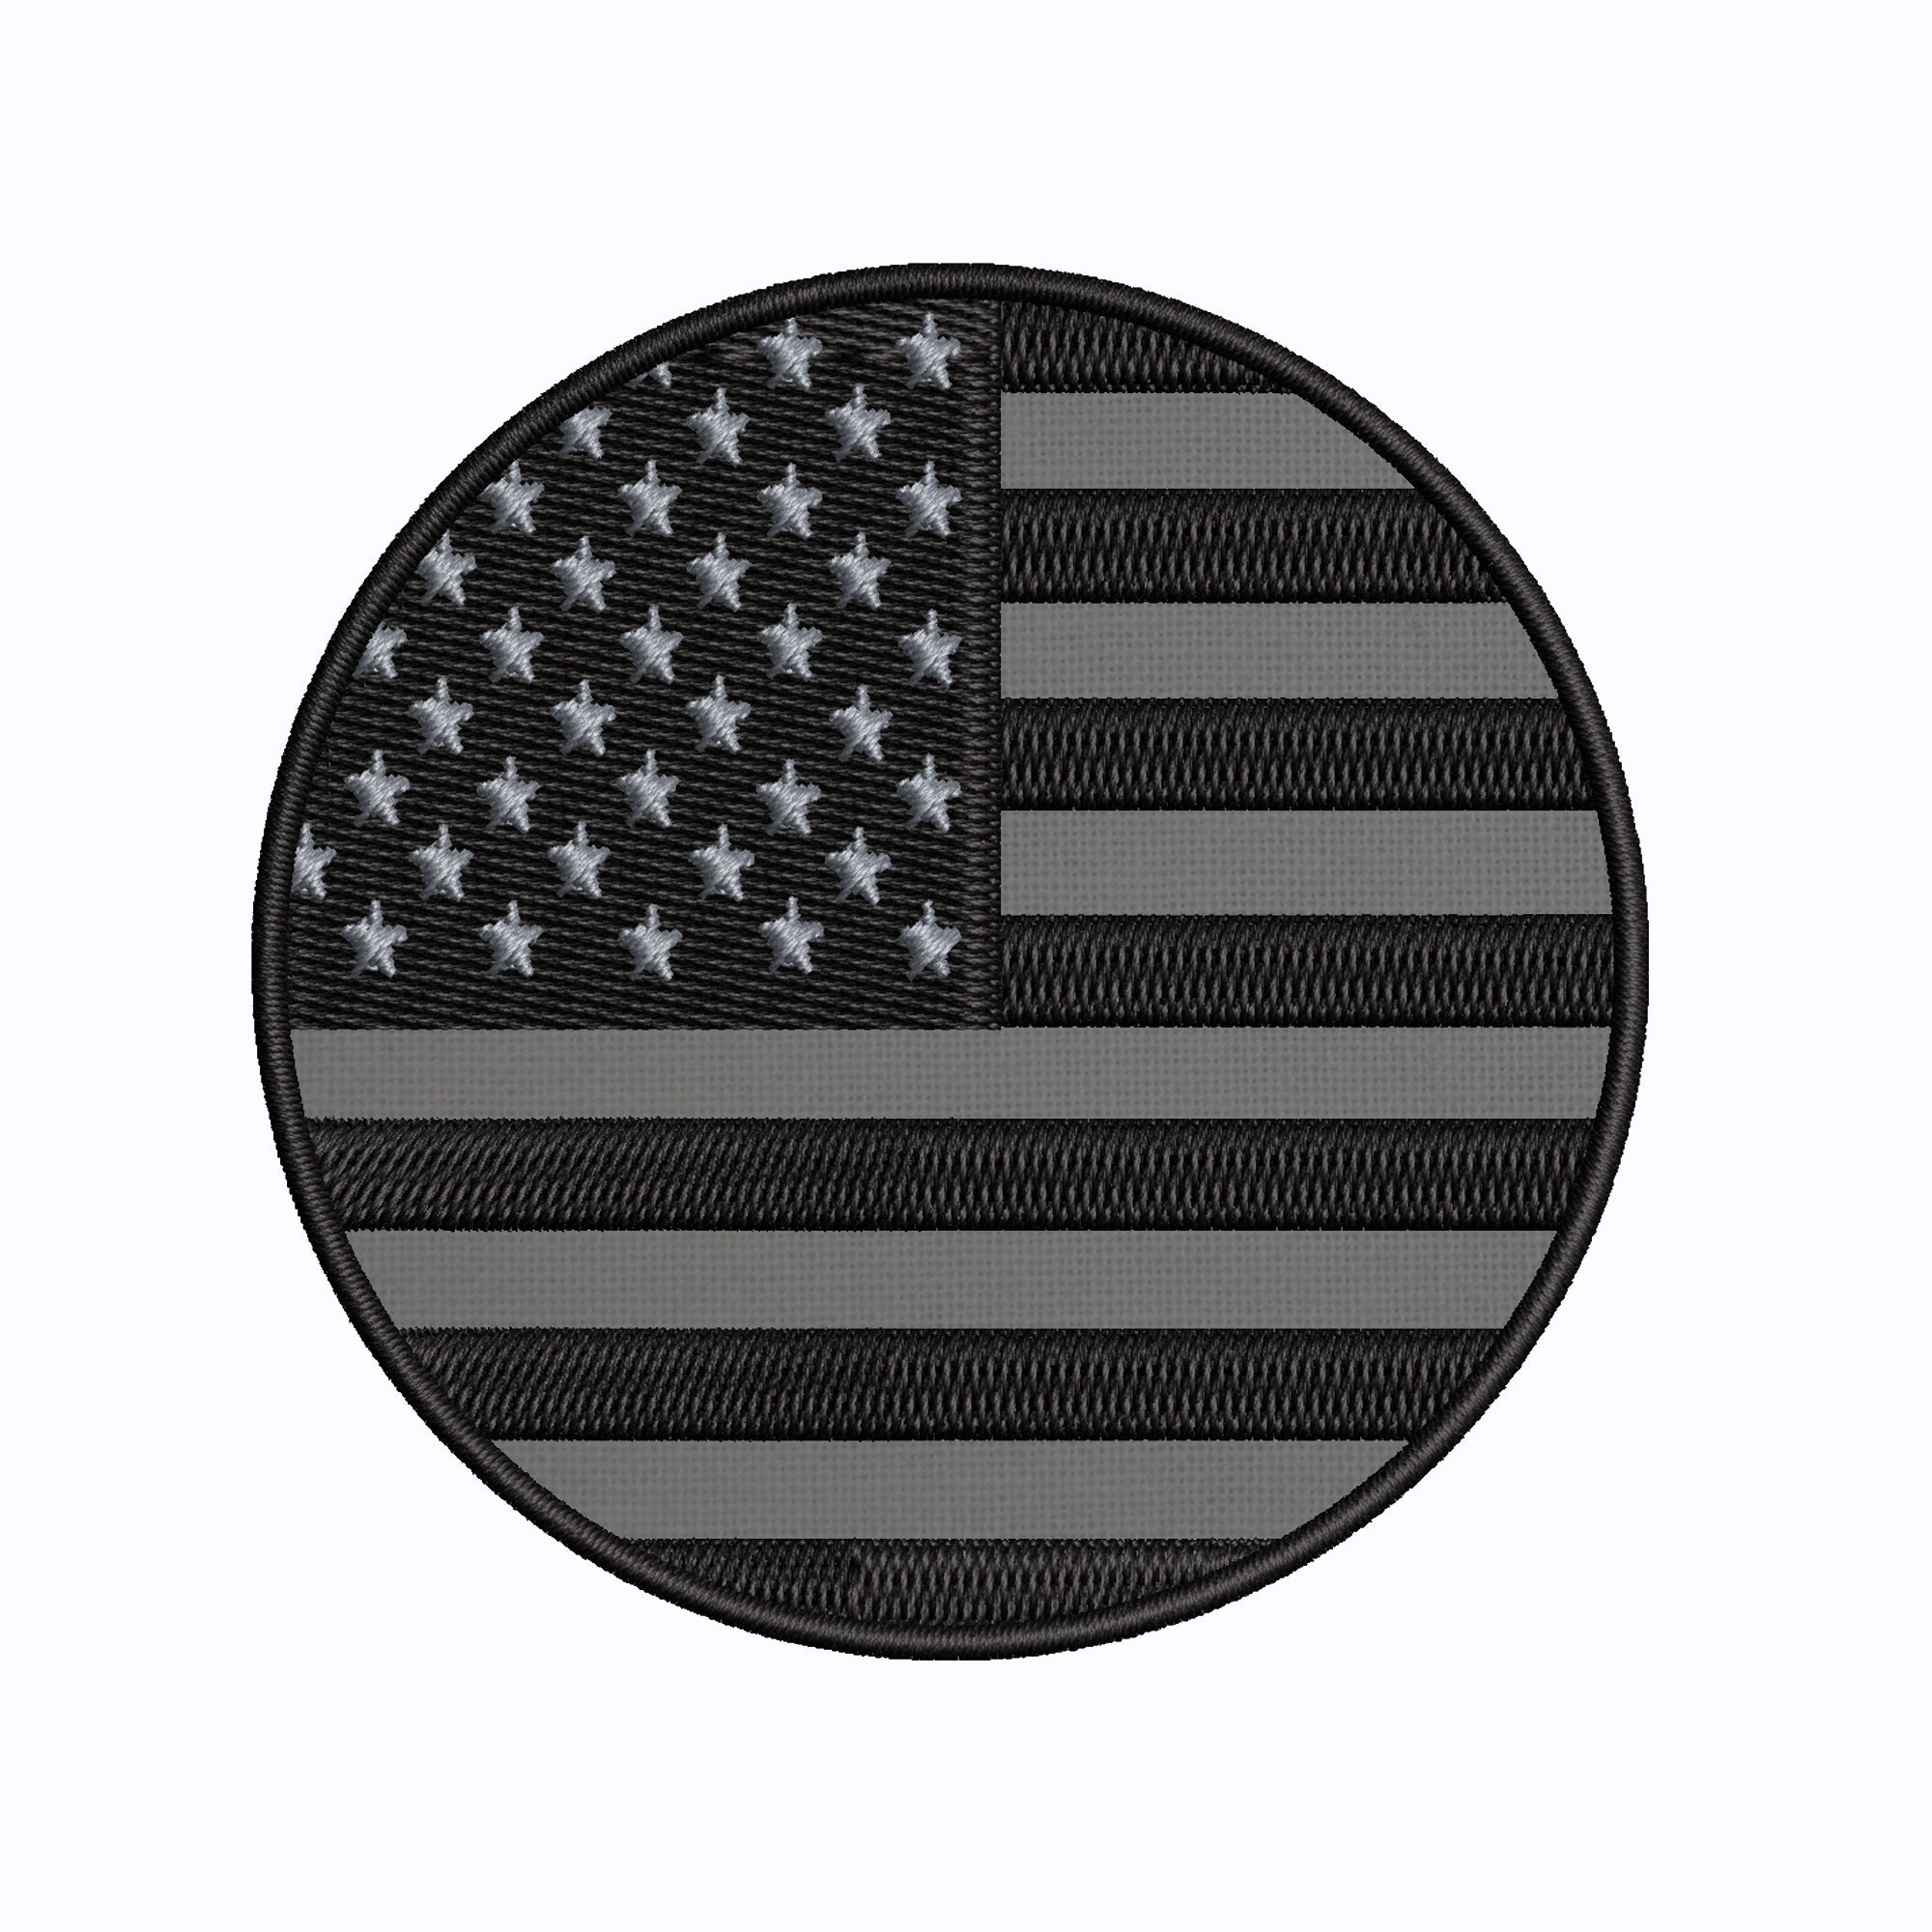 2 X 1 Velcro American Flag Patch 